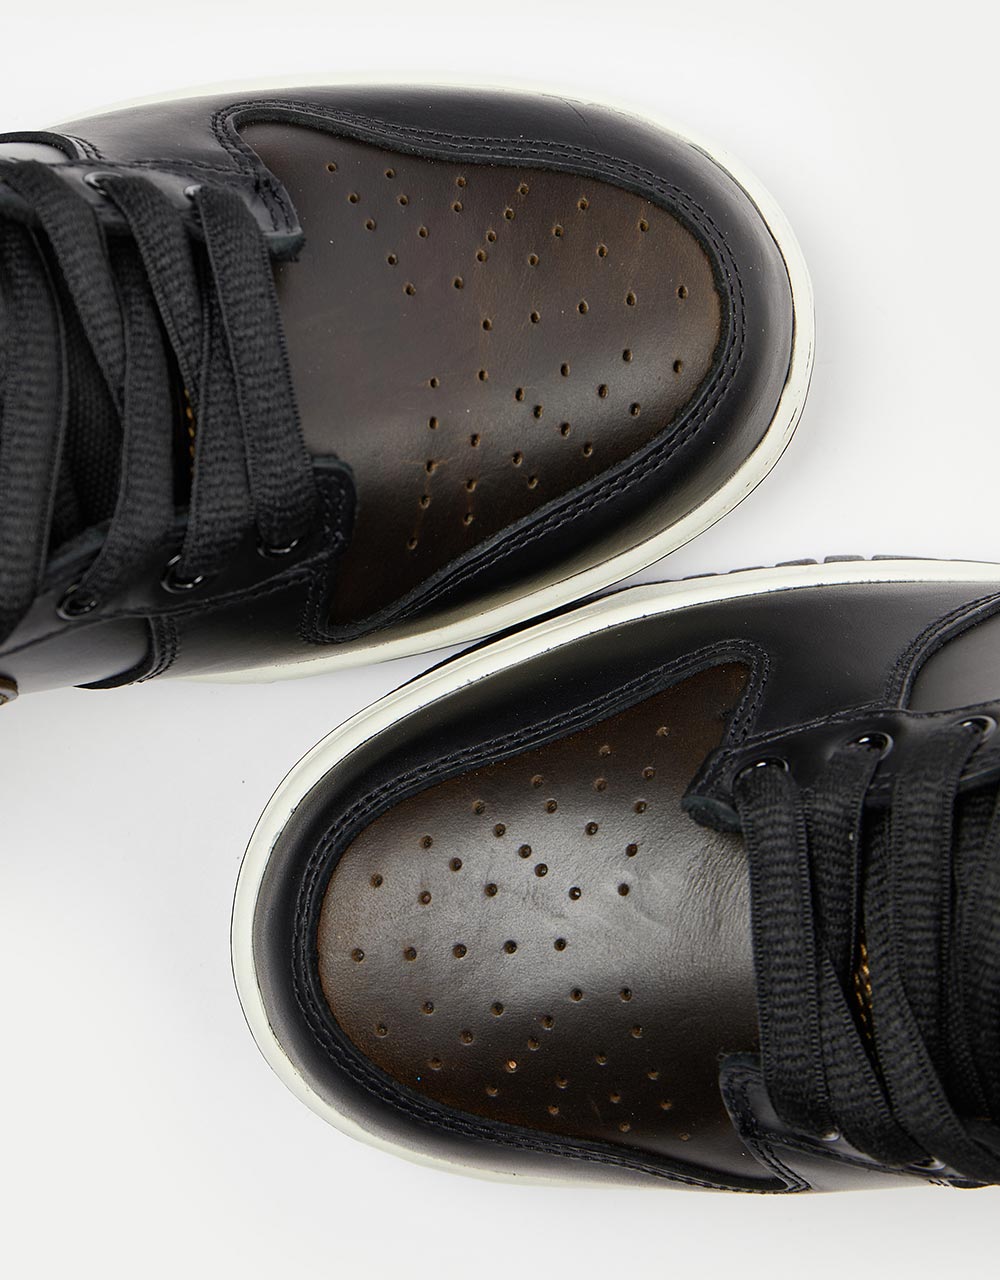 Nike SB 'Pawnshop' Dunk High OG QS Skate Shoes - Black/Black-Metallic Gold